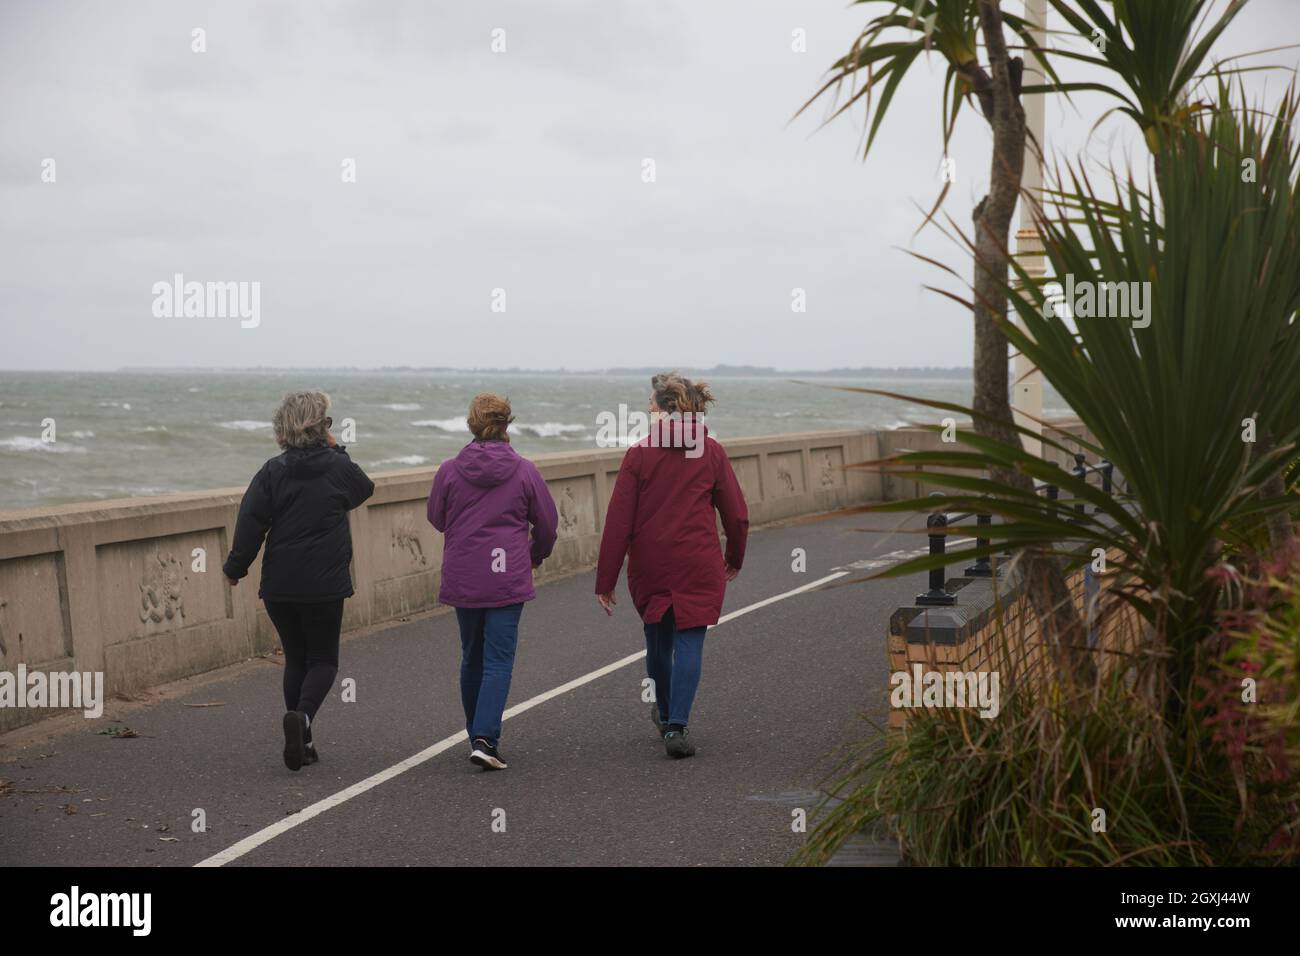 Three women seen walking along the beachfront on a windy day in autumn. Stock Photo